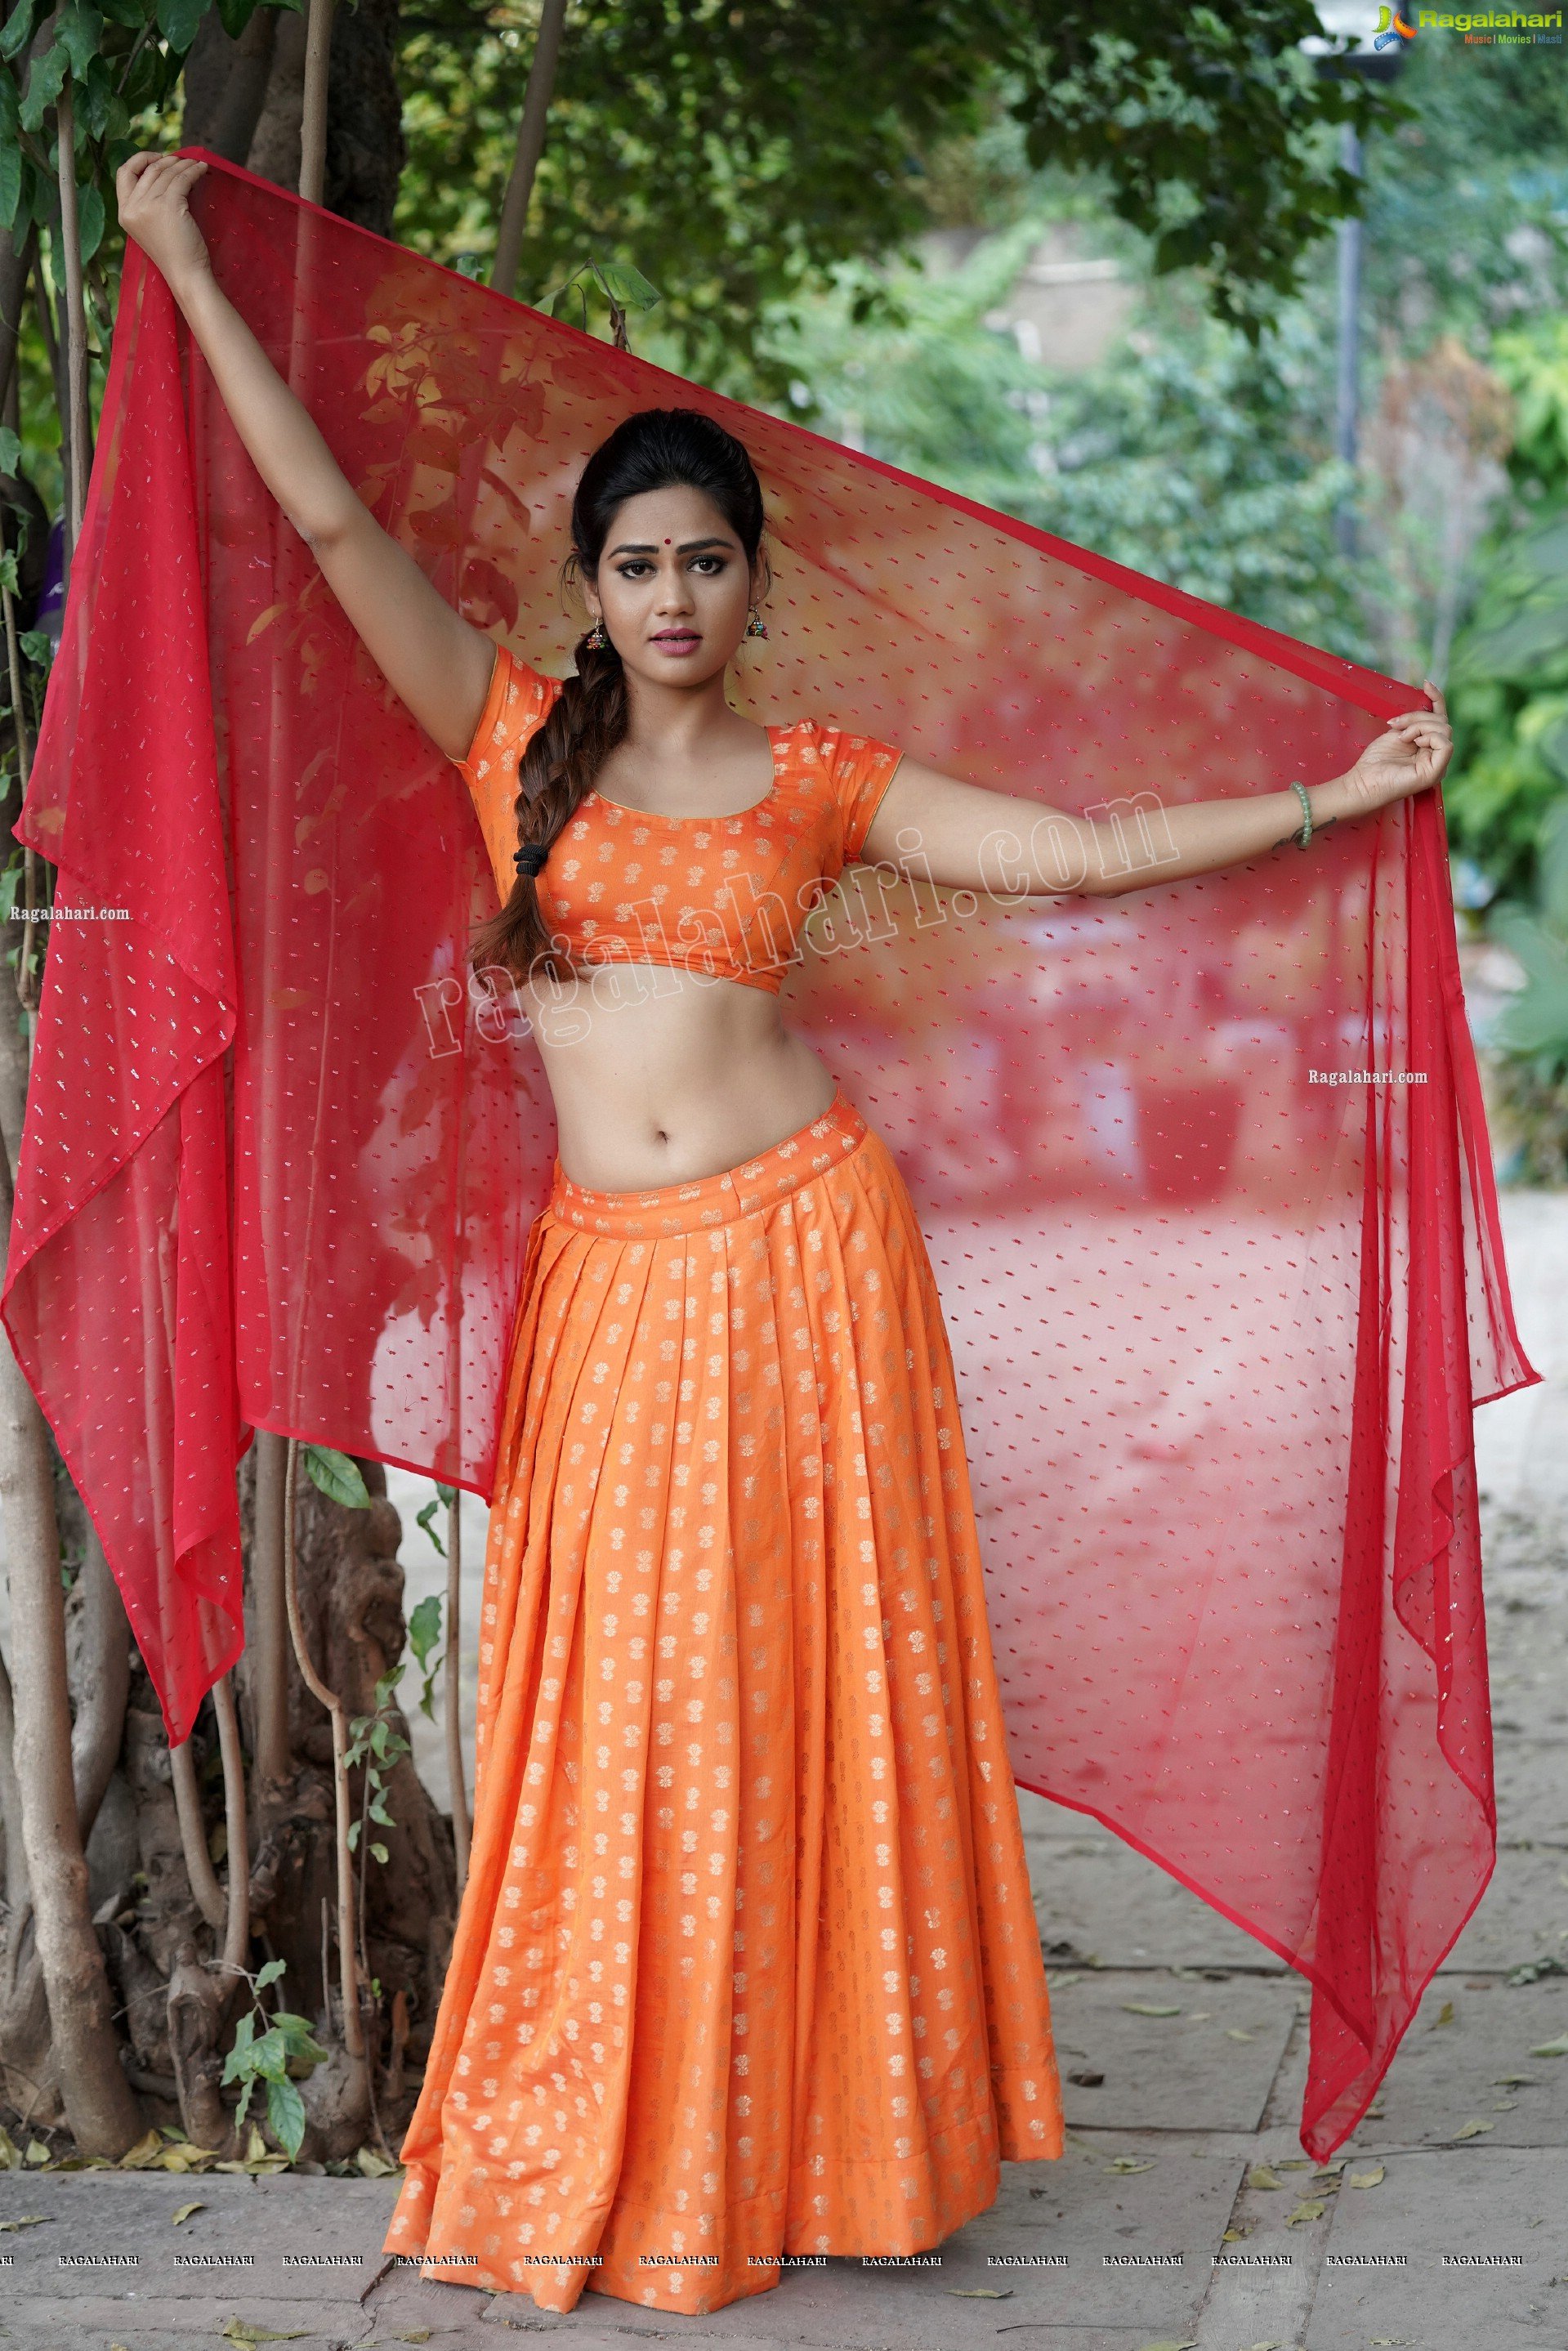 Aparnna Mallik in Orange and Red Half Saree, Exclusive Photoshoot